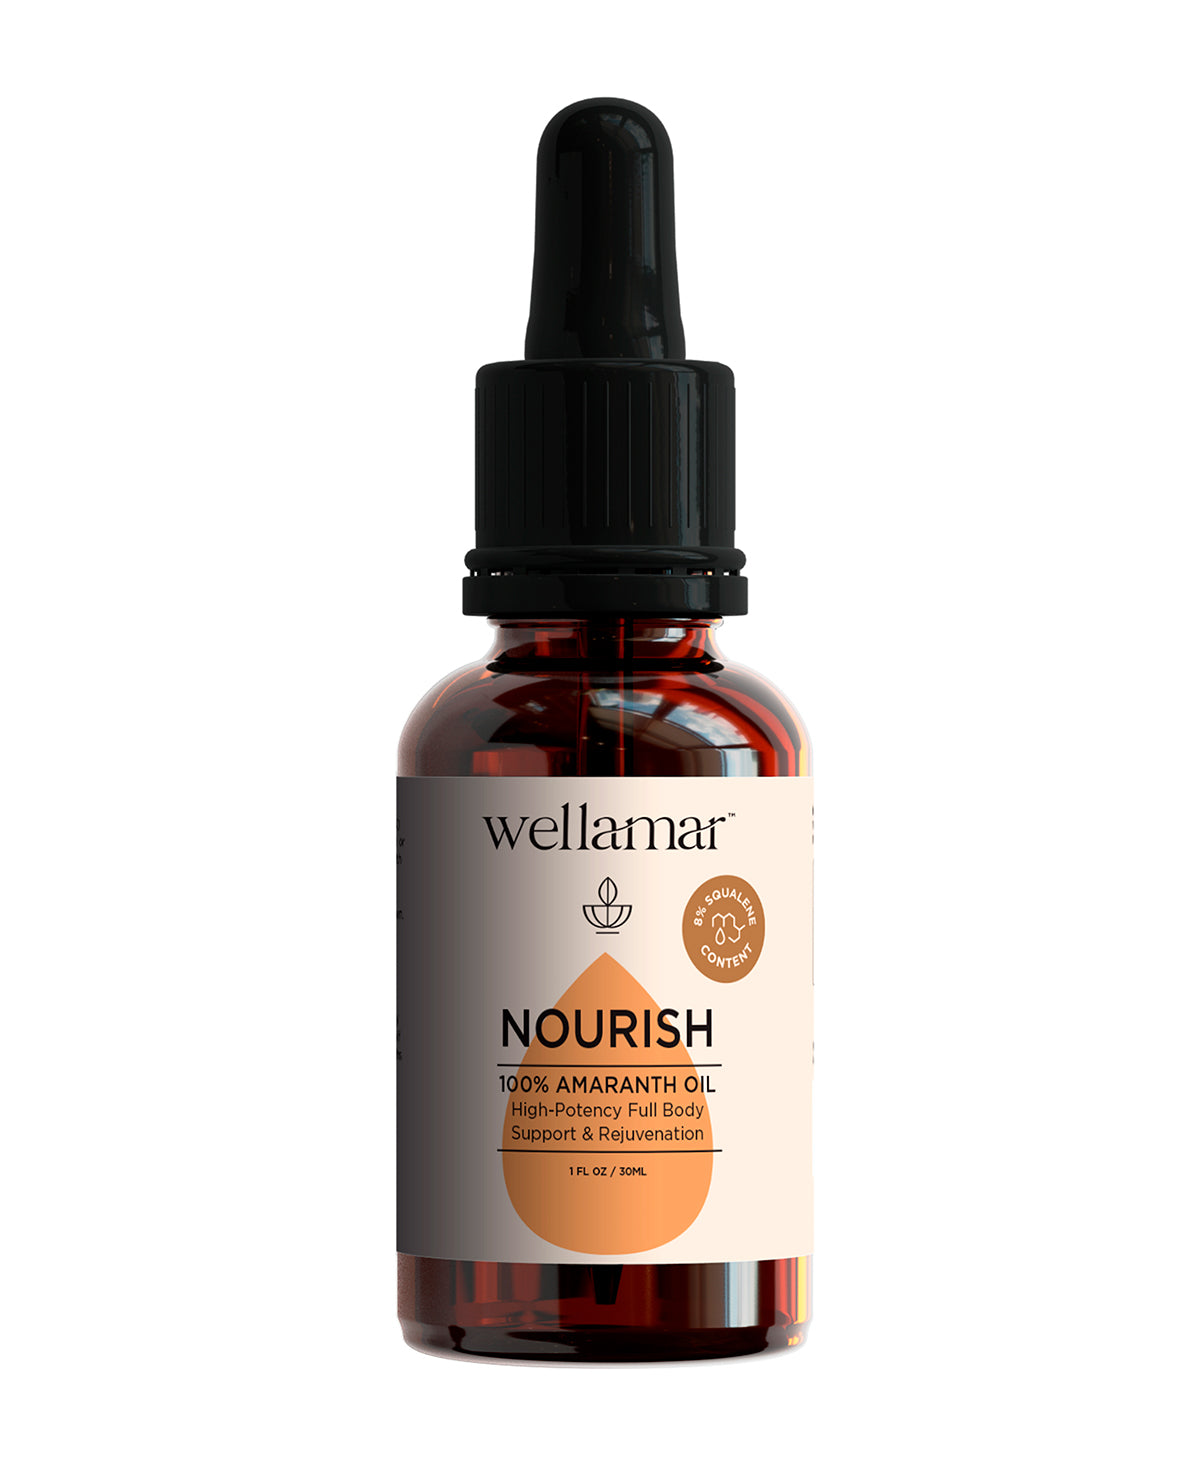 Nourish: 100% Amaranth Oil Drops